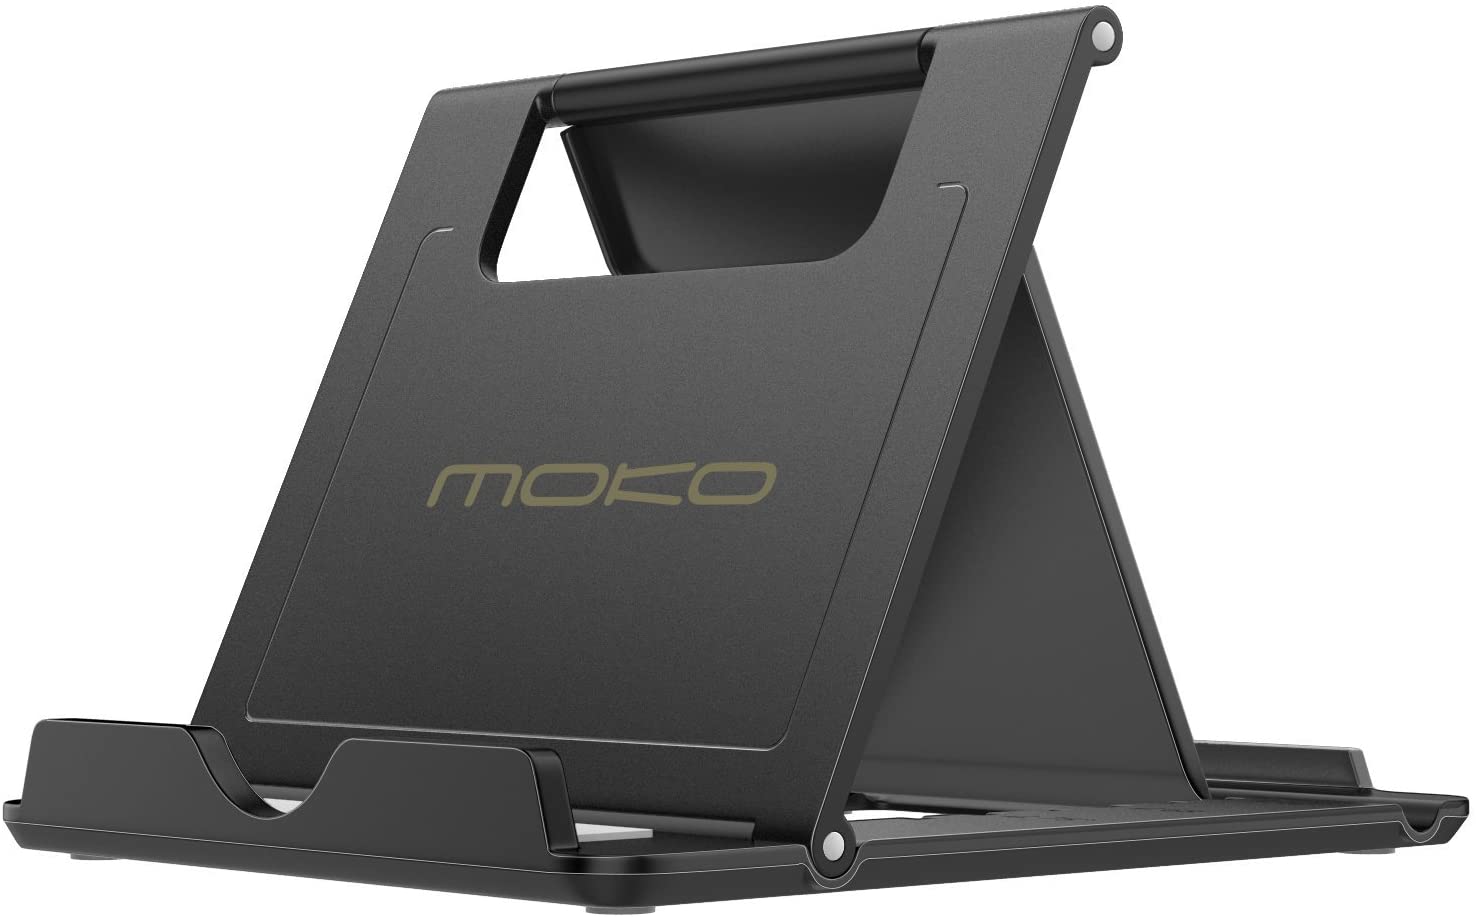 MoKo Foldable Desktop